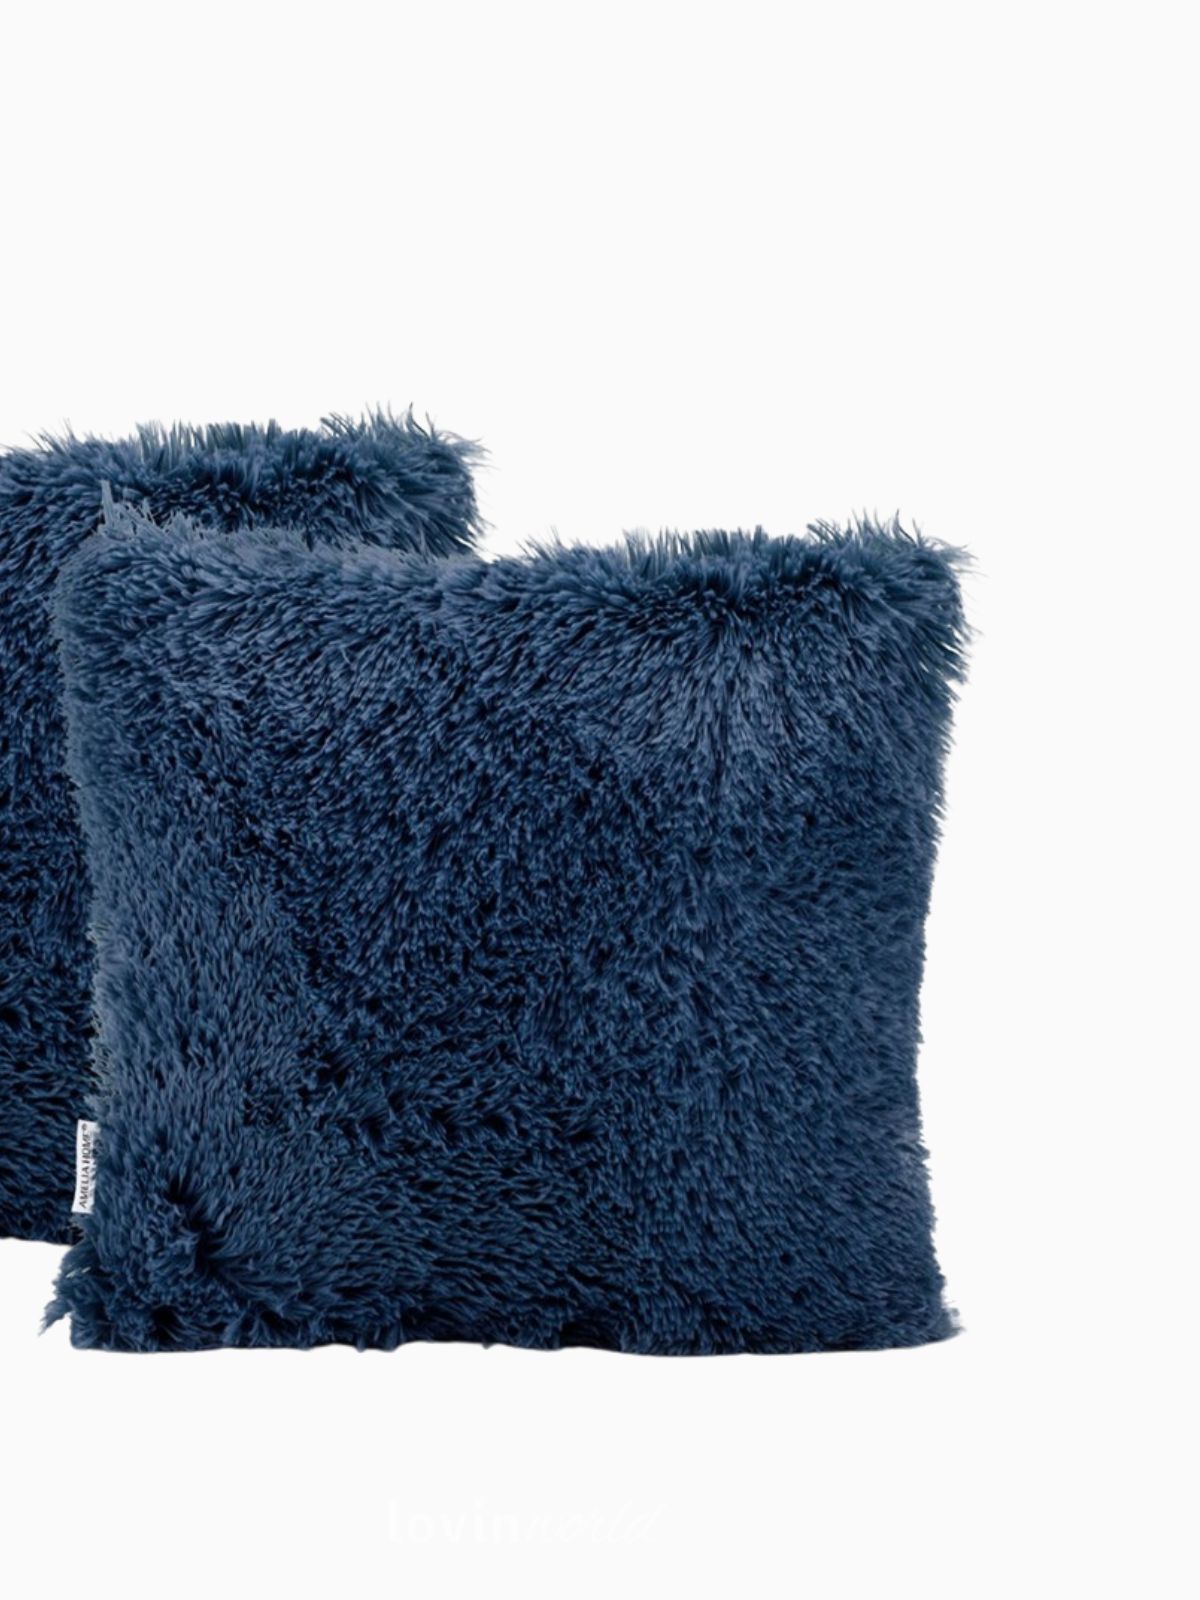 2 Federe per cuscino Karvag in colore blu scuro 45x45 cm.-6